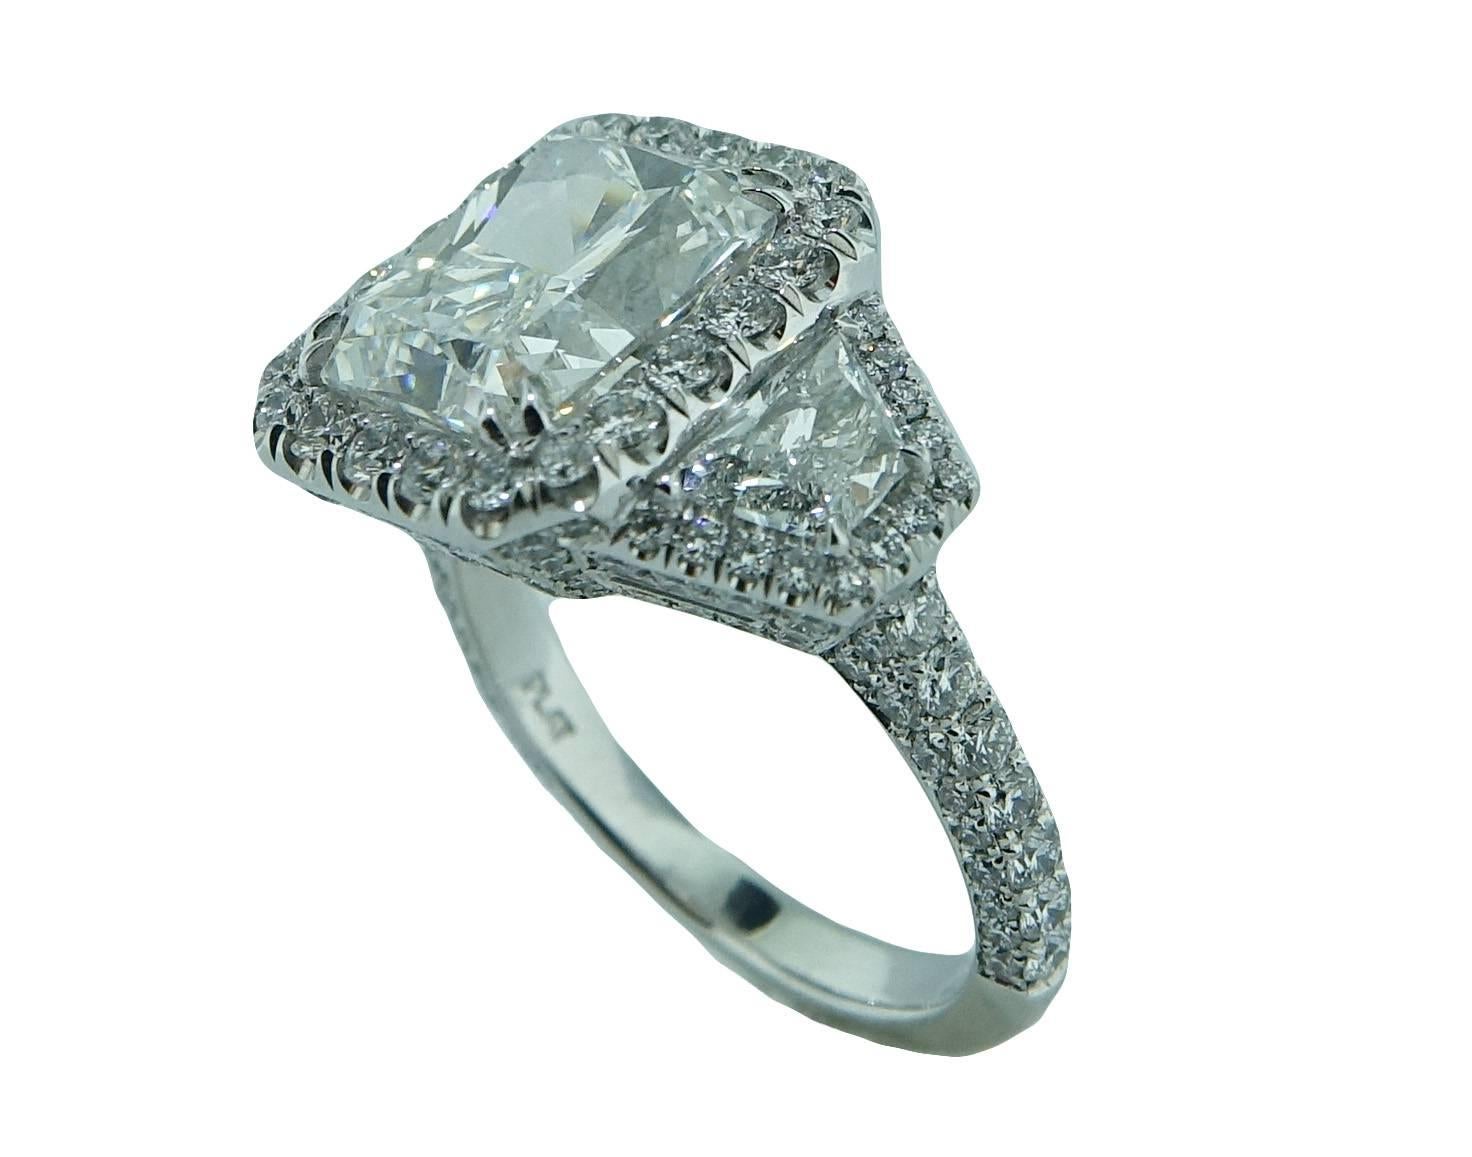 4.25 carat diamond ring